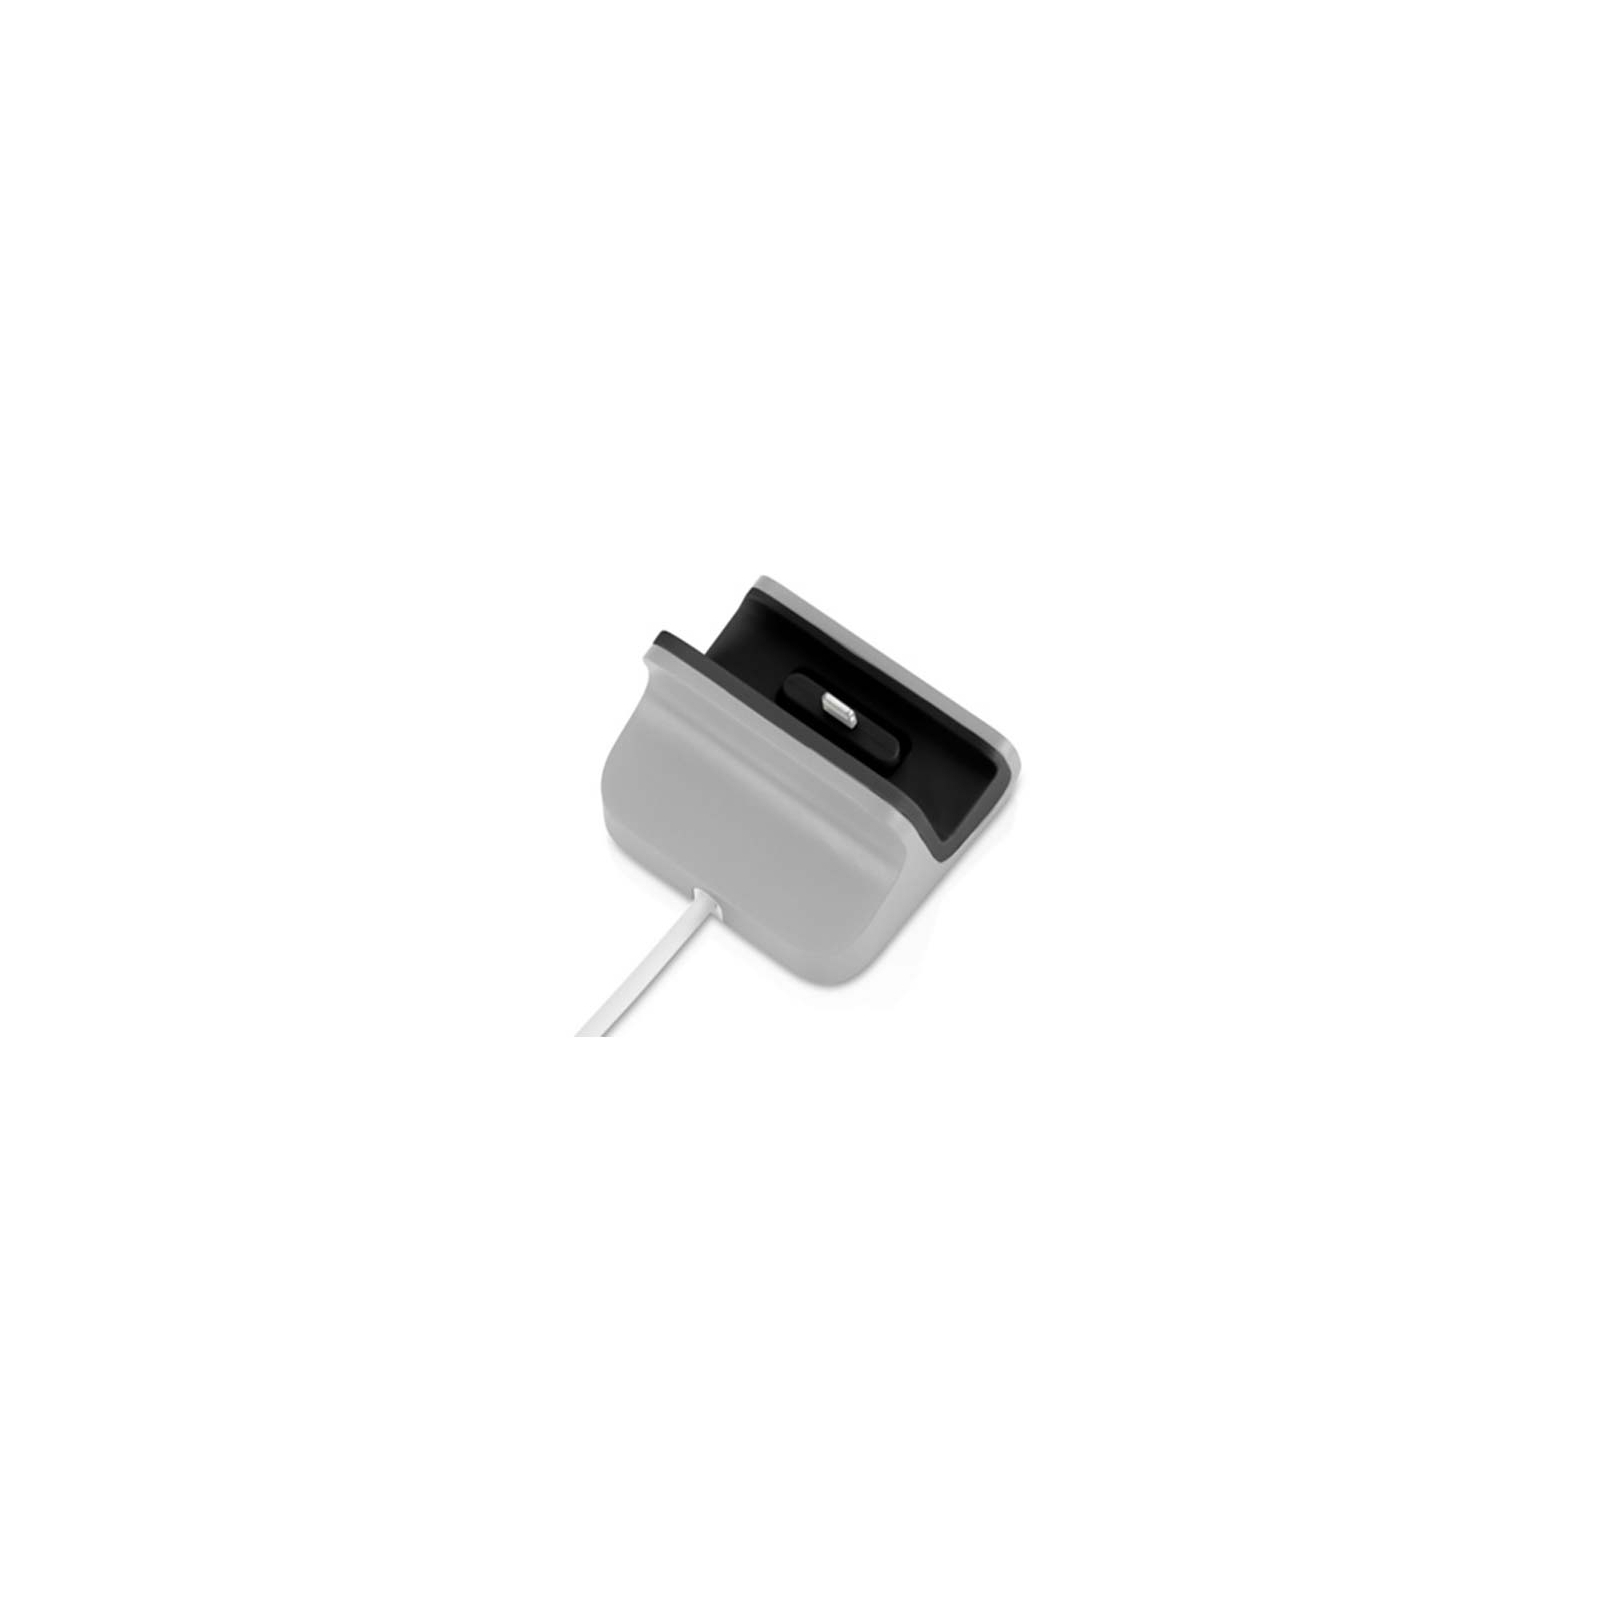 Зарядное устройство Belkin Charge+Sync MIXIT iPhone 5 Dock (F8J045bt) изображение 5